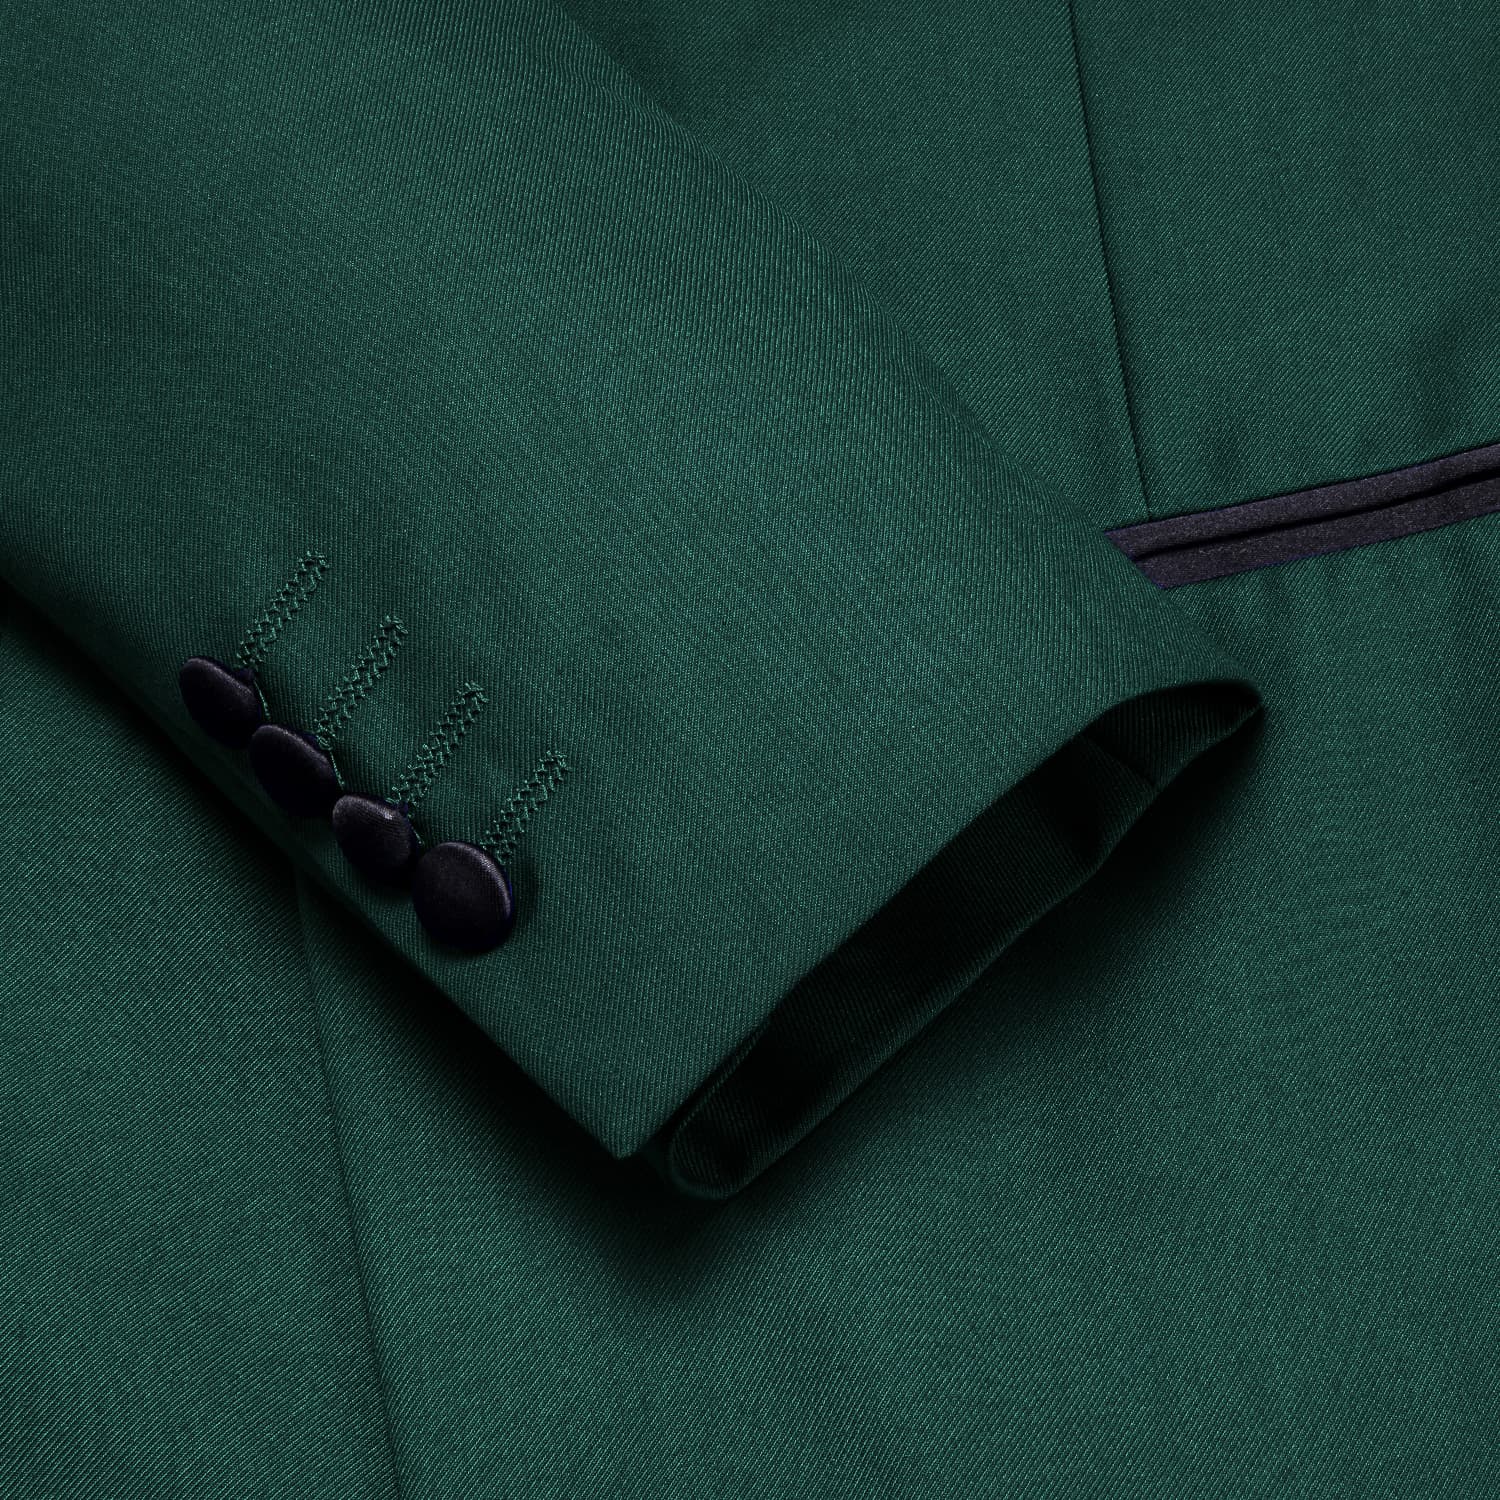 Hi-Tie Black Shawl Collar Green Solid Blazer with Bowtie Men's Suit Set